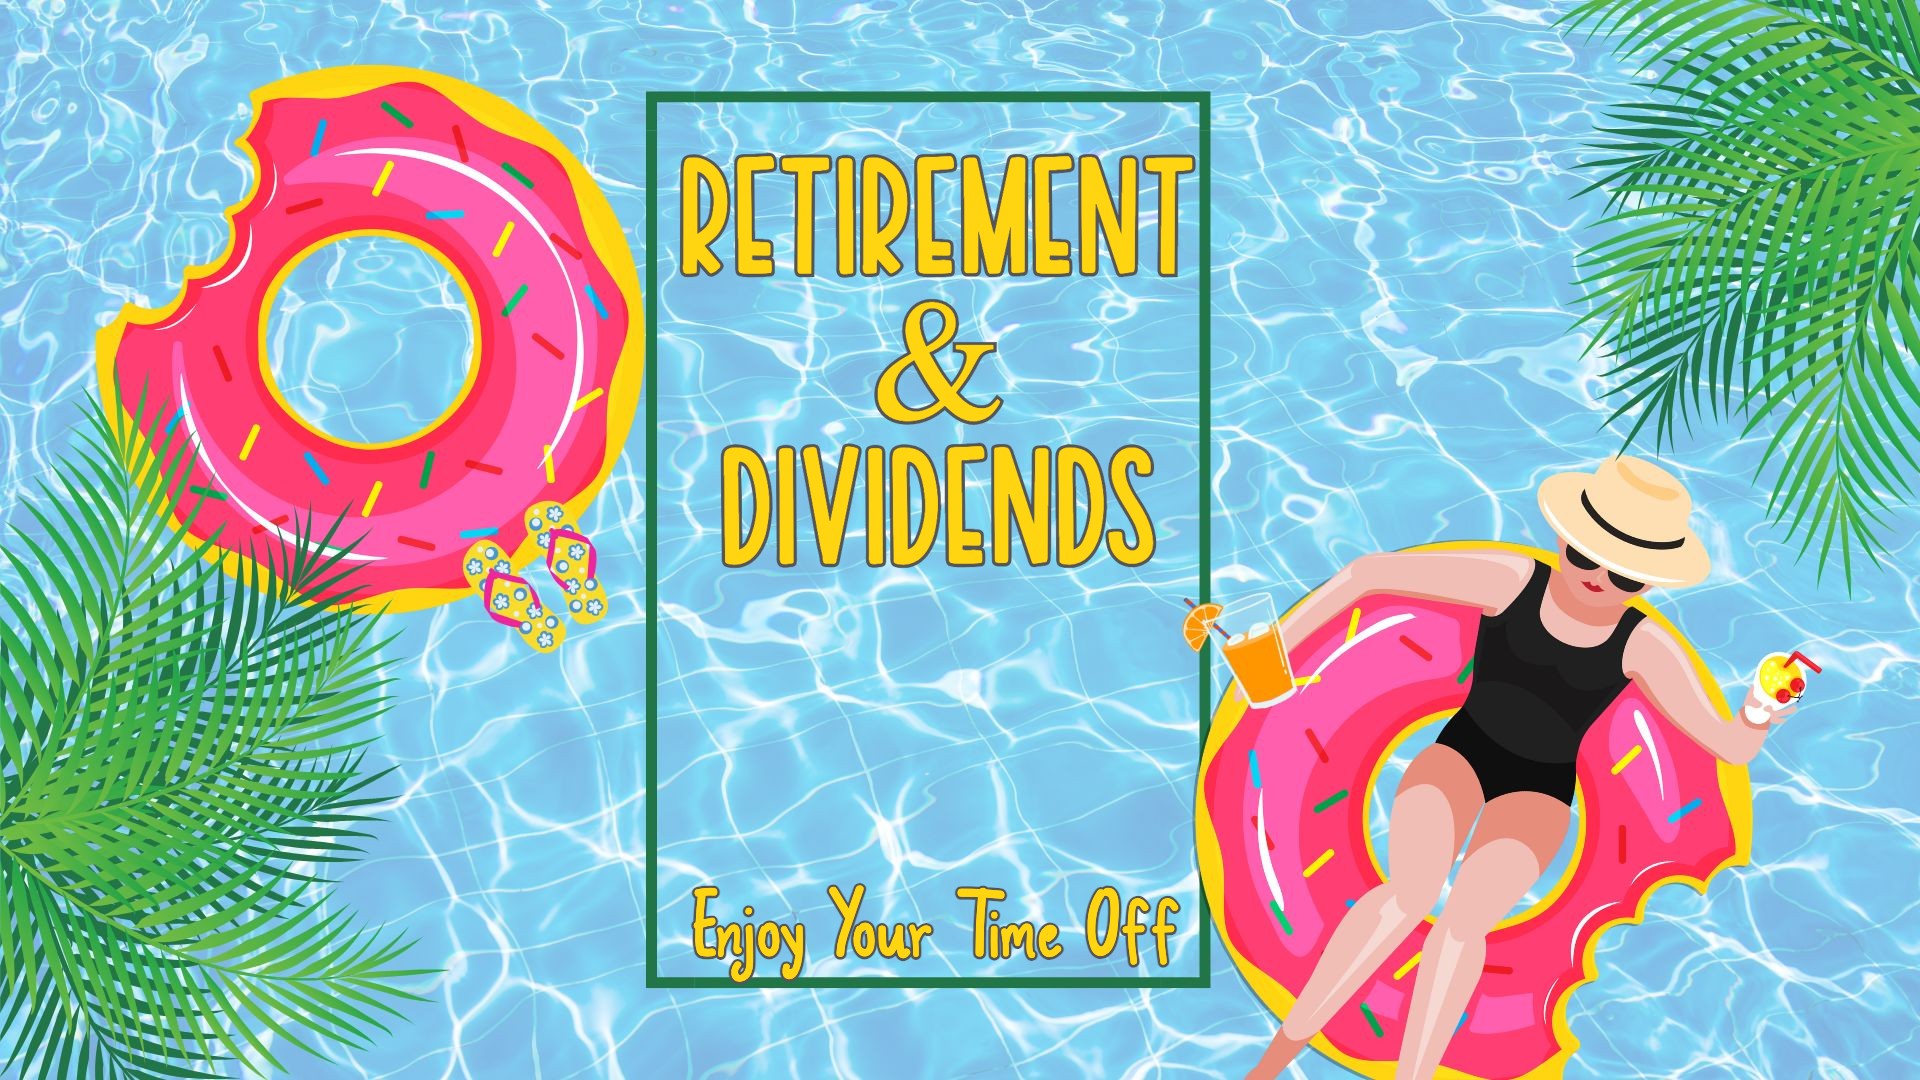 Retirement & Dividends: Enjoy Your Time Off